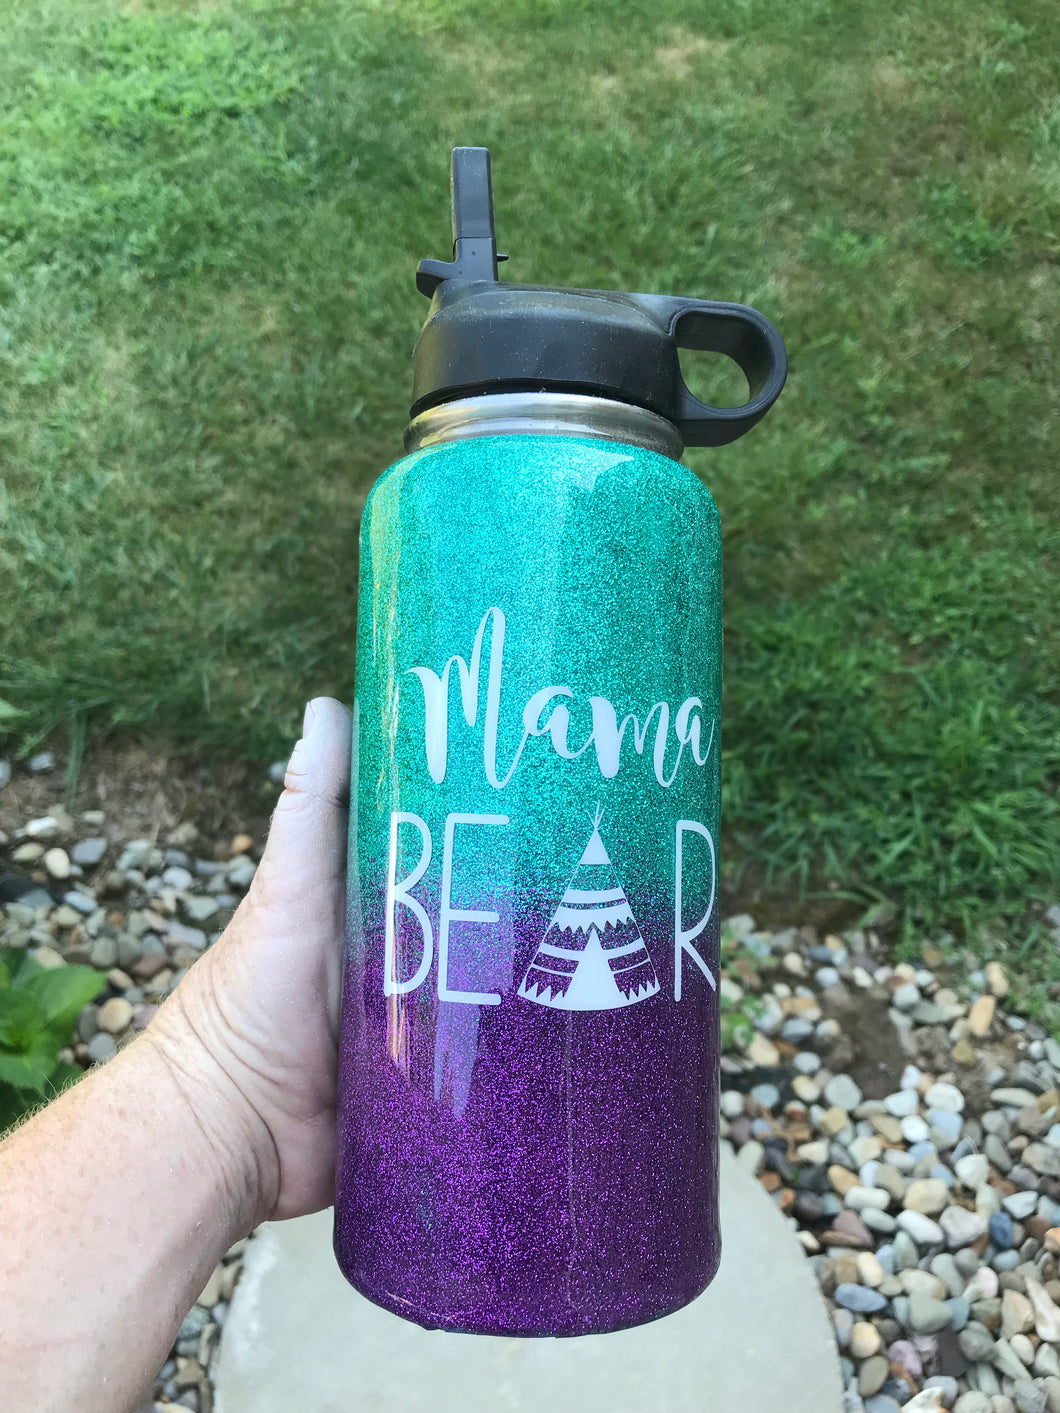 Mother's Day Gift Set] ~ Hydro Flask Mug & Hippopotamus Chief Bear (Hawaii  Exclusive)